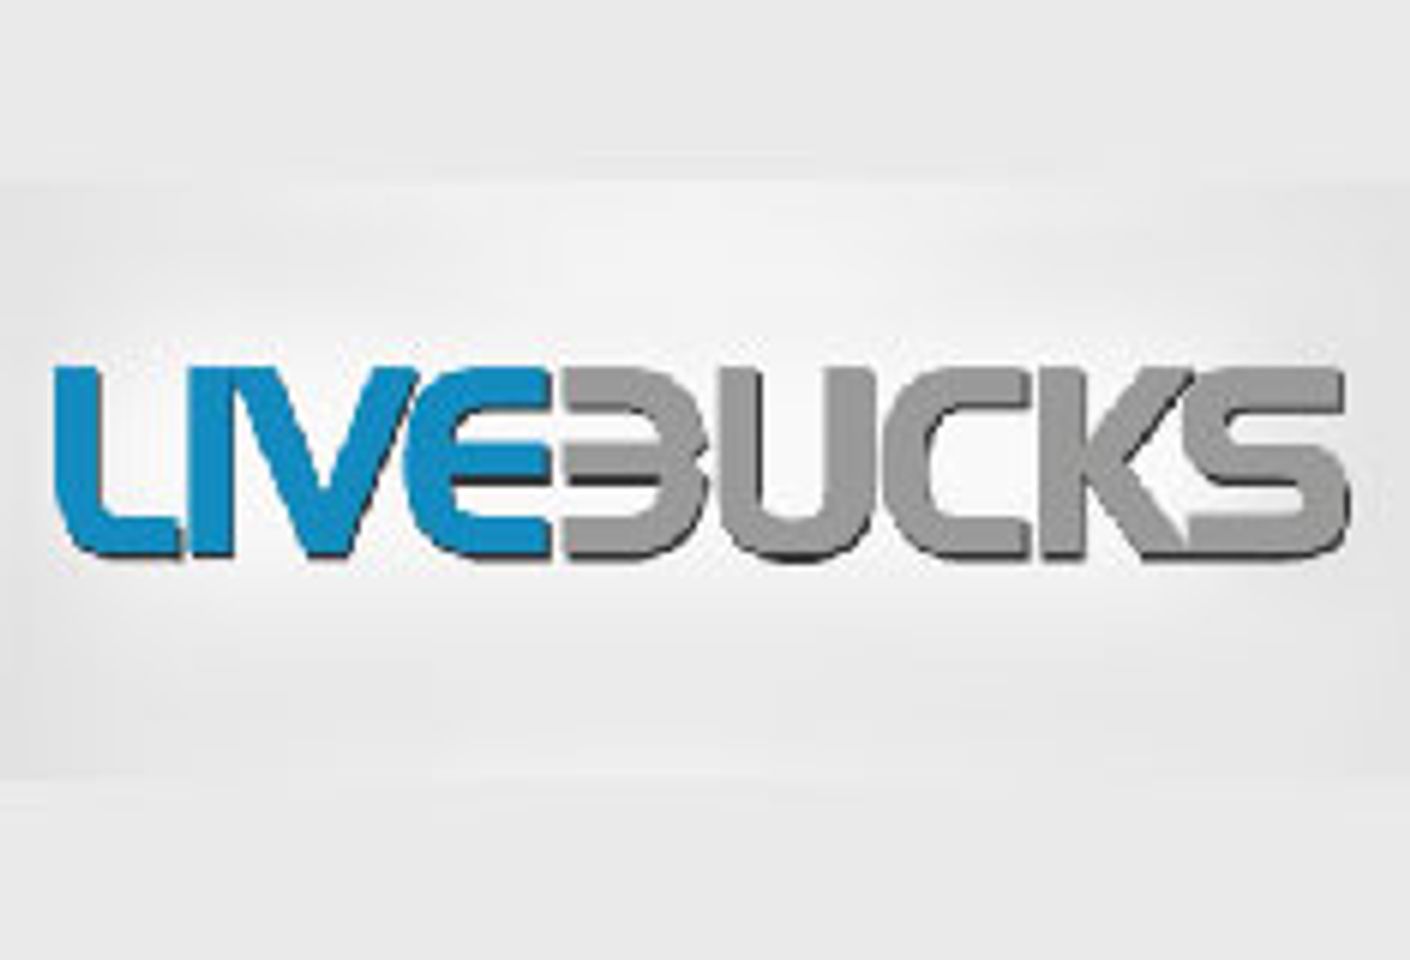 LiveBucks Launch 2-Way Live Webcam Sessions